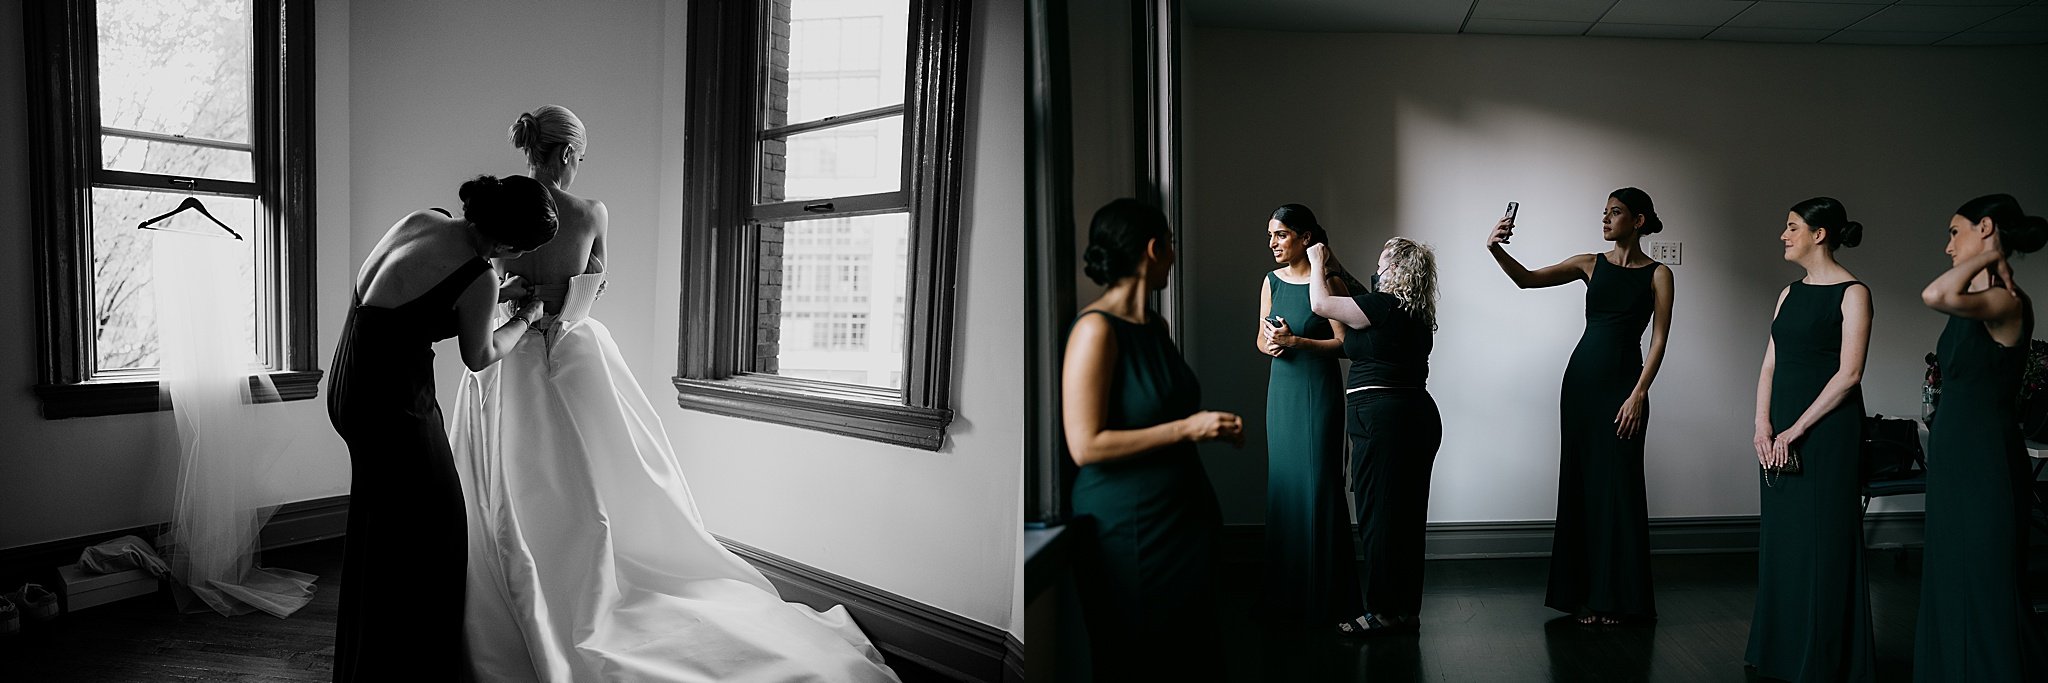 Highline_Hotel_NYC_Wedding-0008.jpg